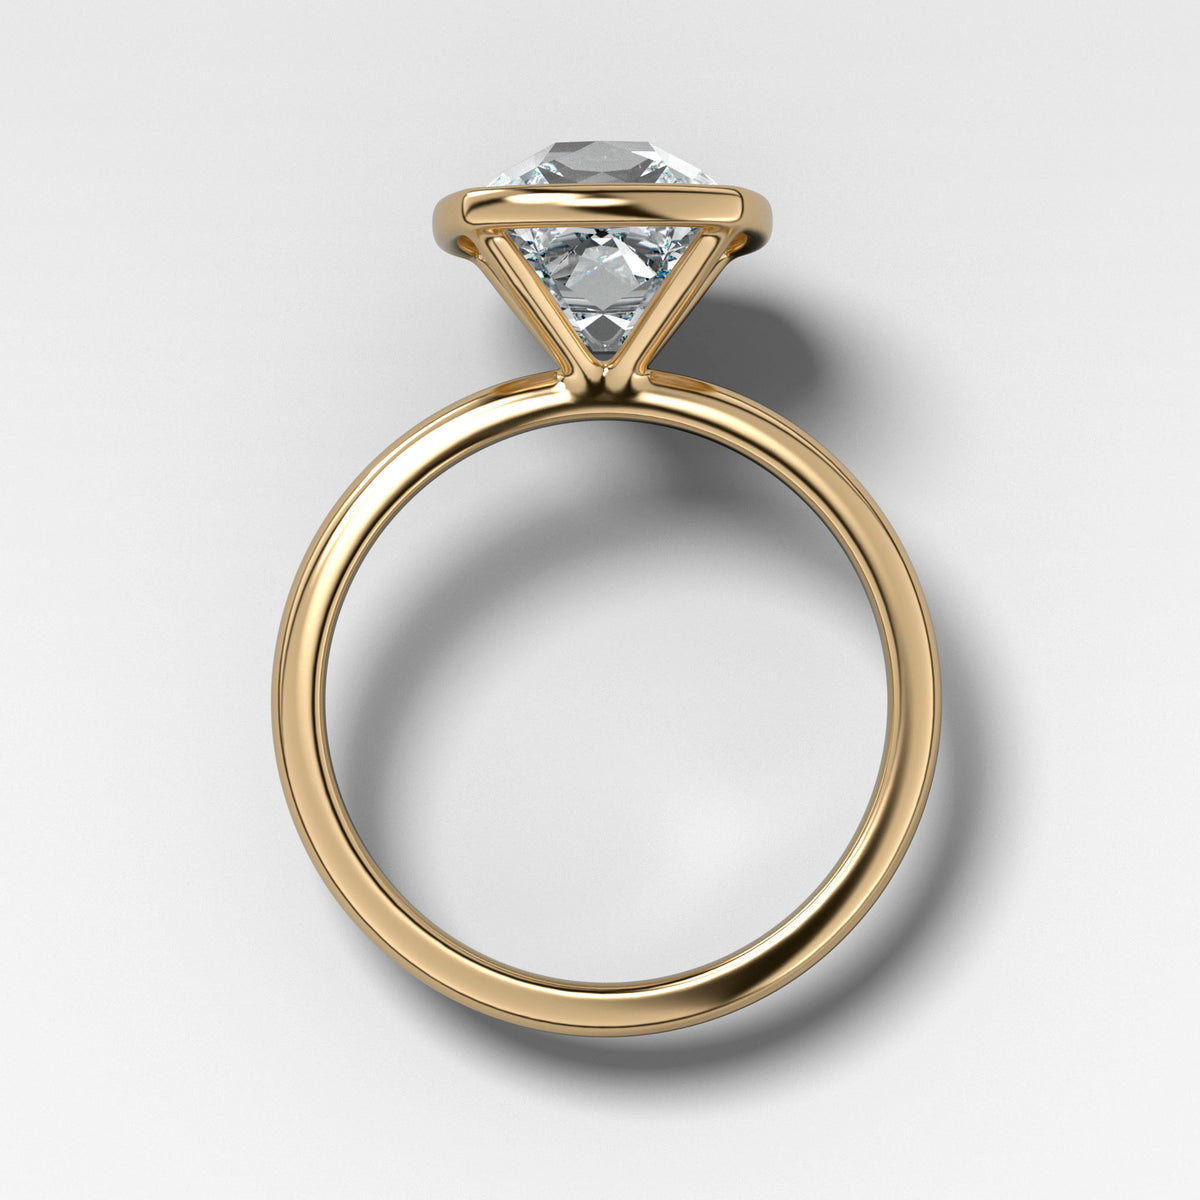 Penumbra Bezel Set Engagement Ring With Old Mine Cut